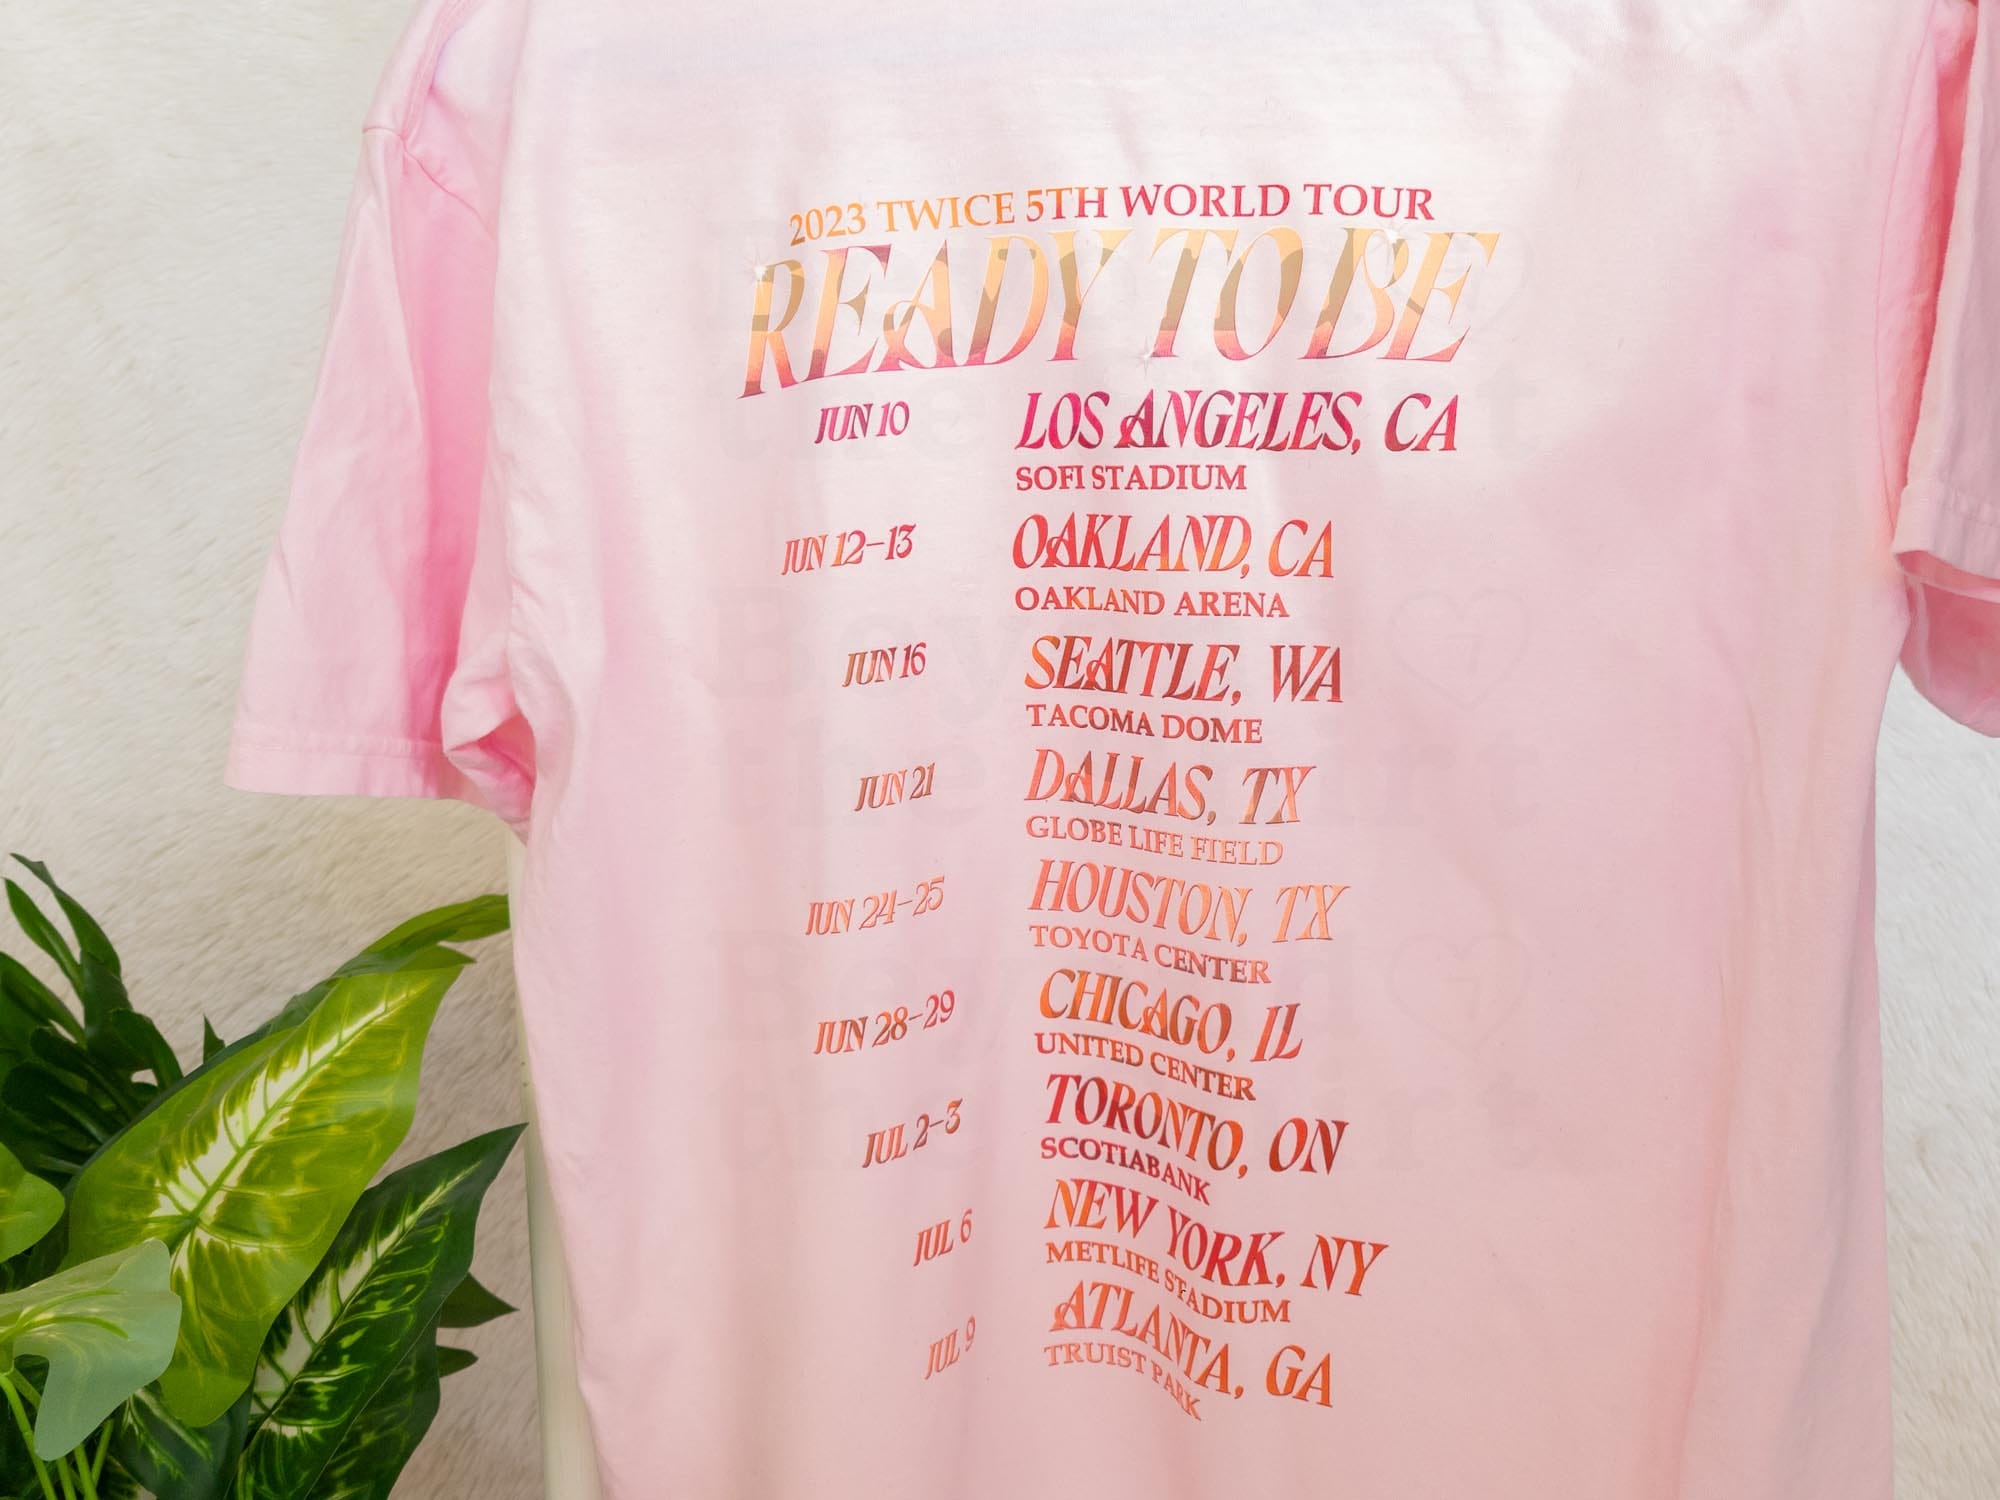 TWICE Tour Shirts - Ready to Be 2023 World Tour